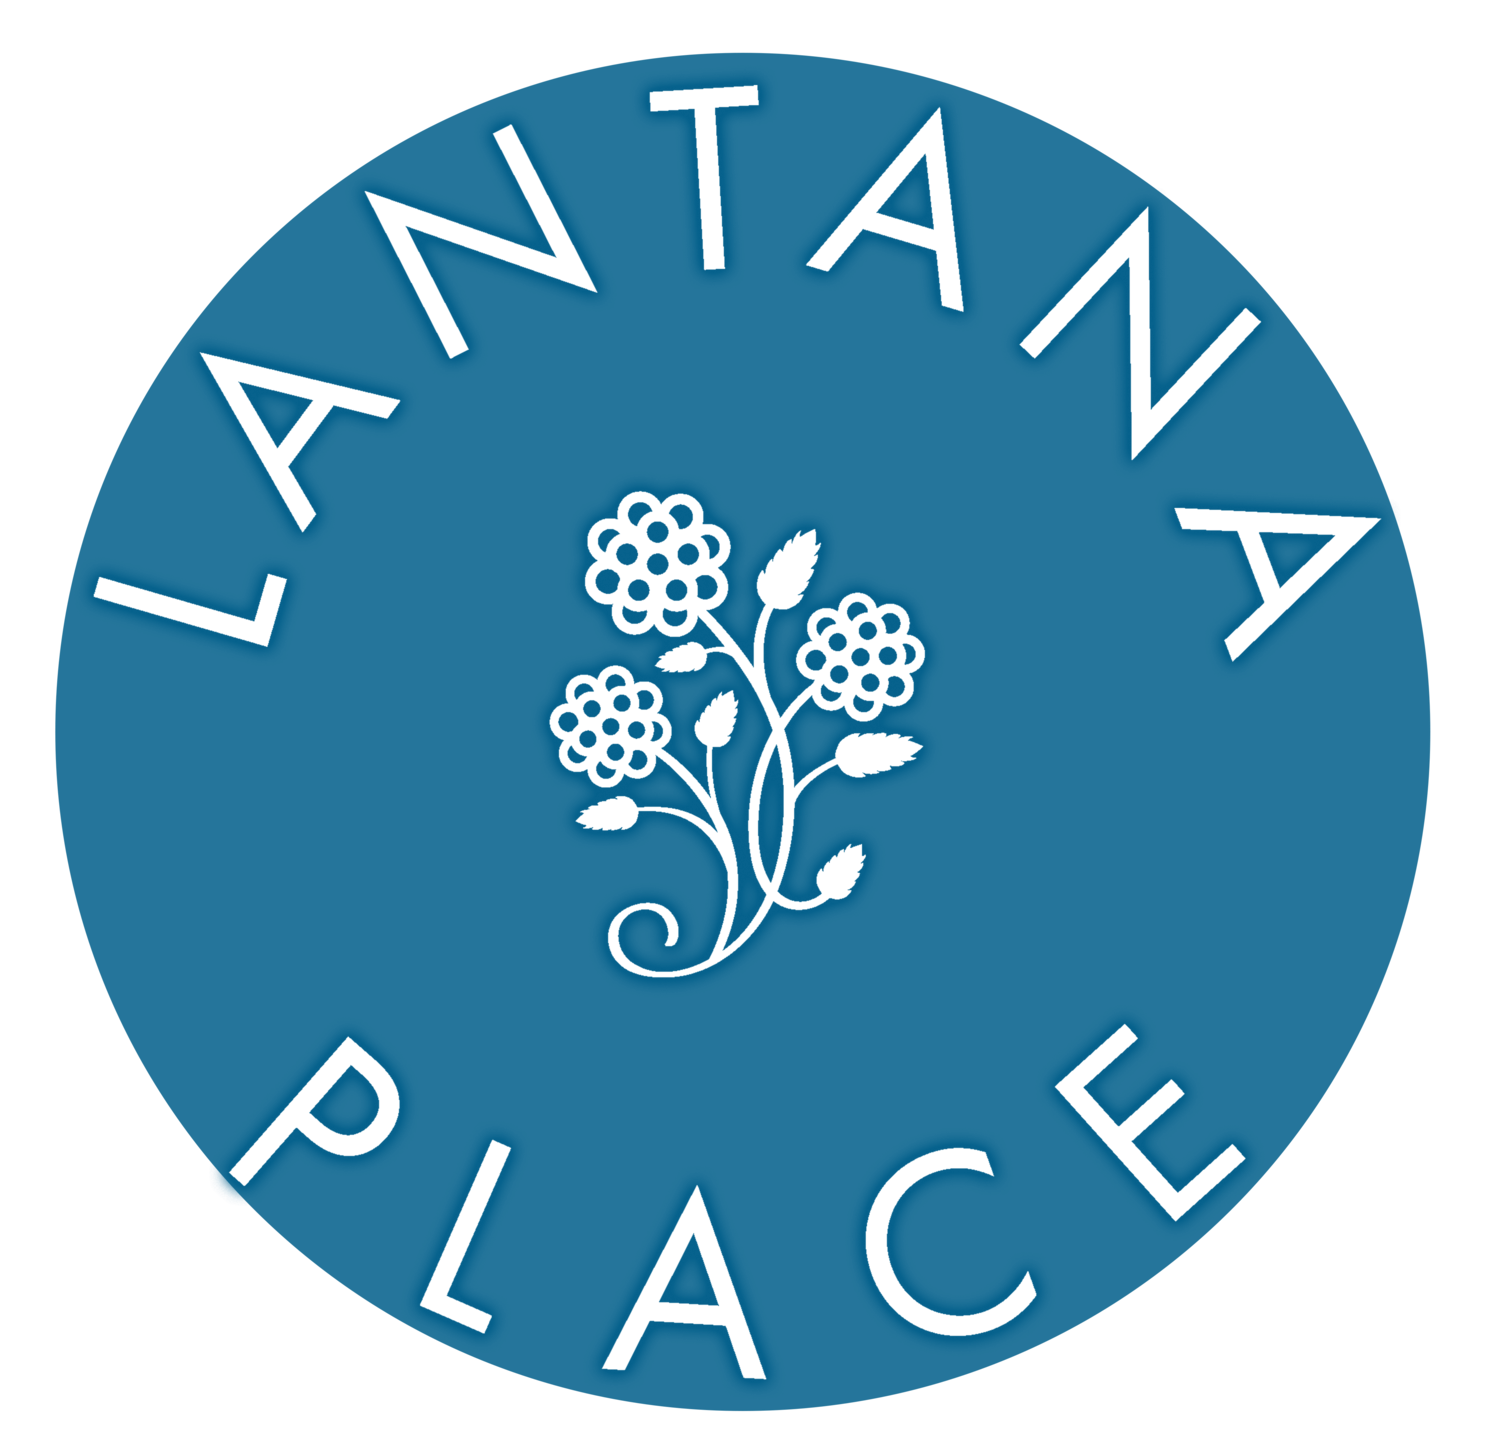 Lantana Place